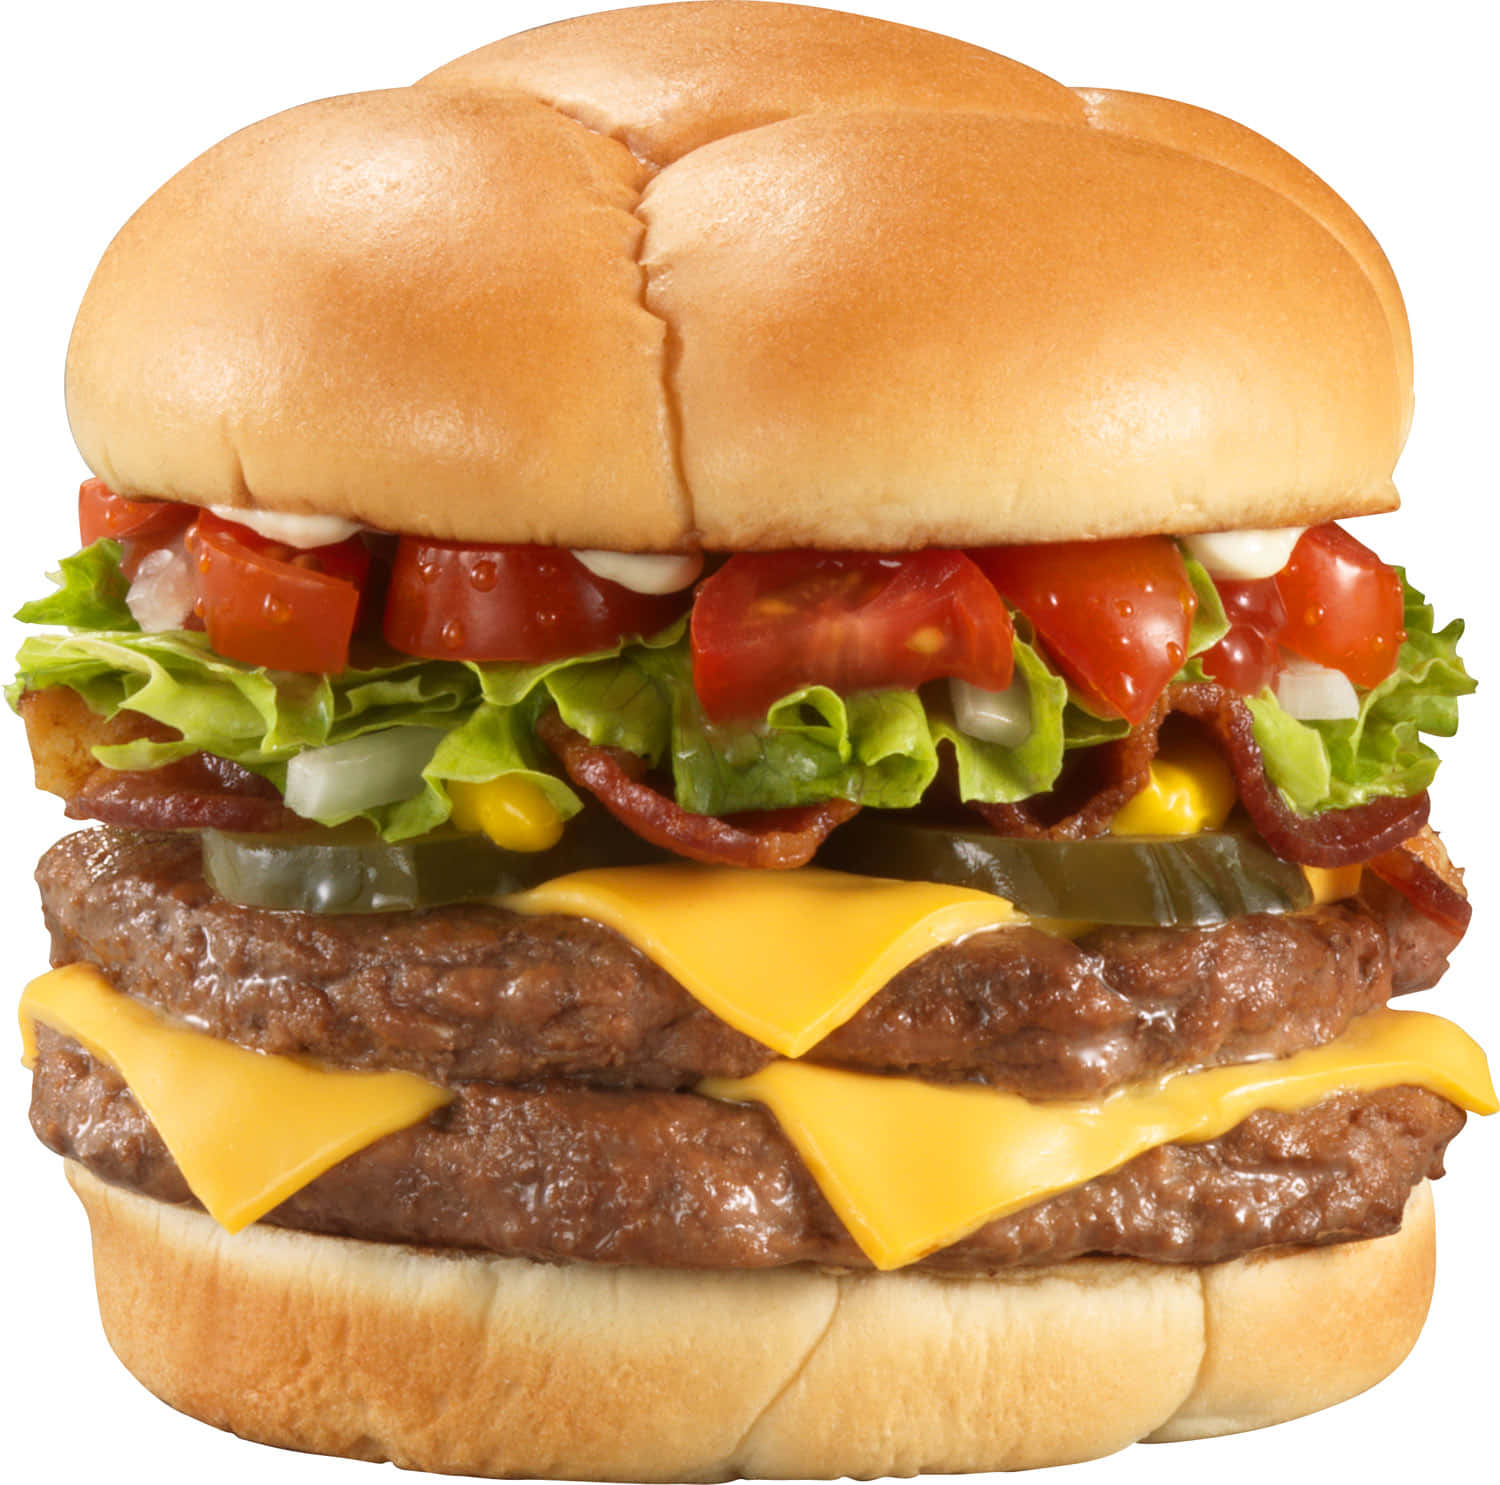 Enjoy a delicious hamburger!